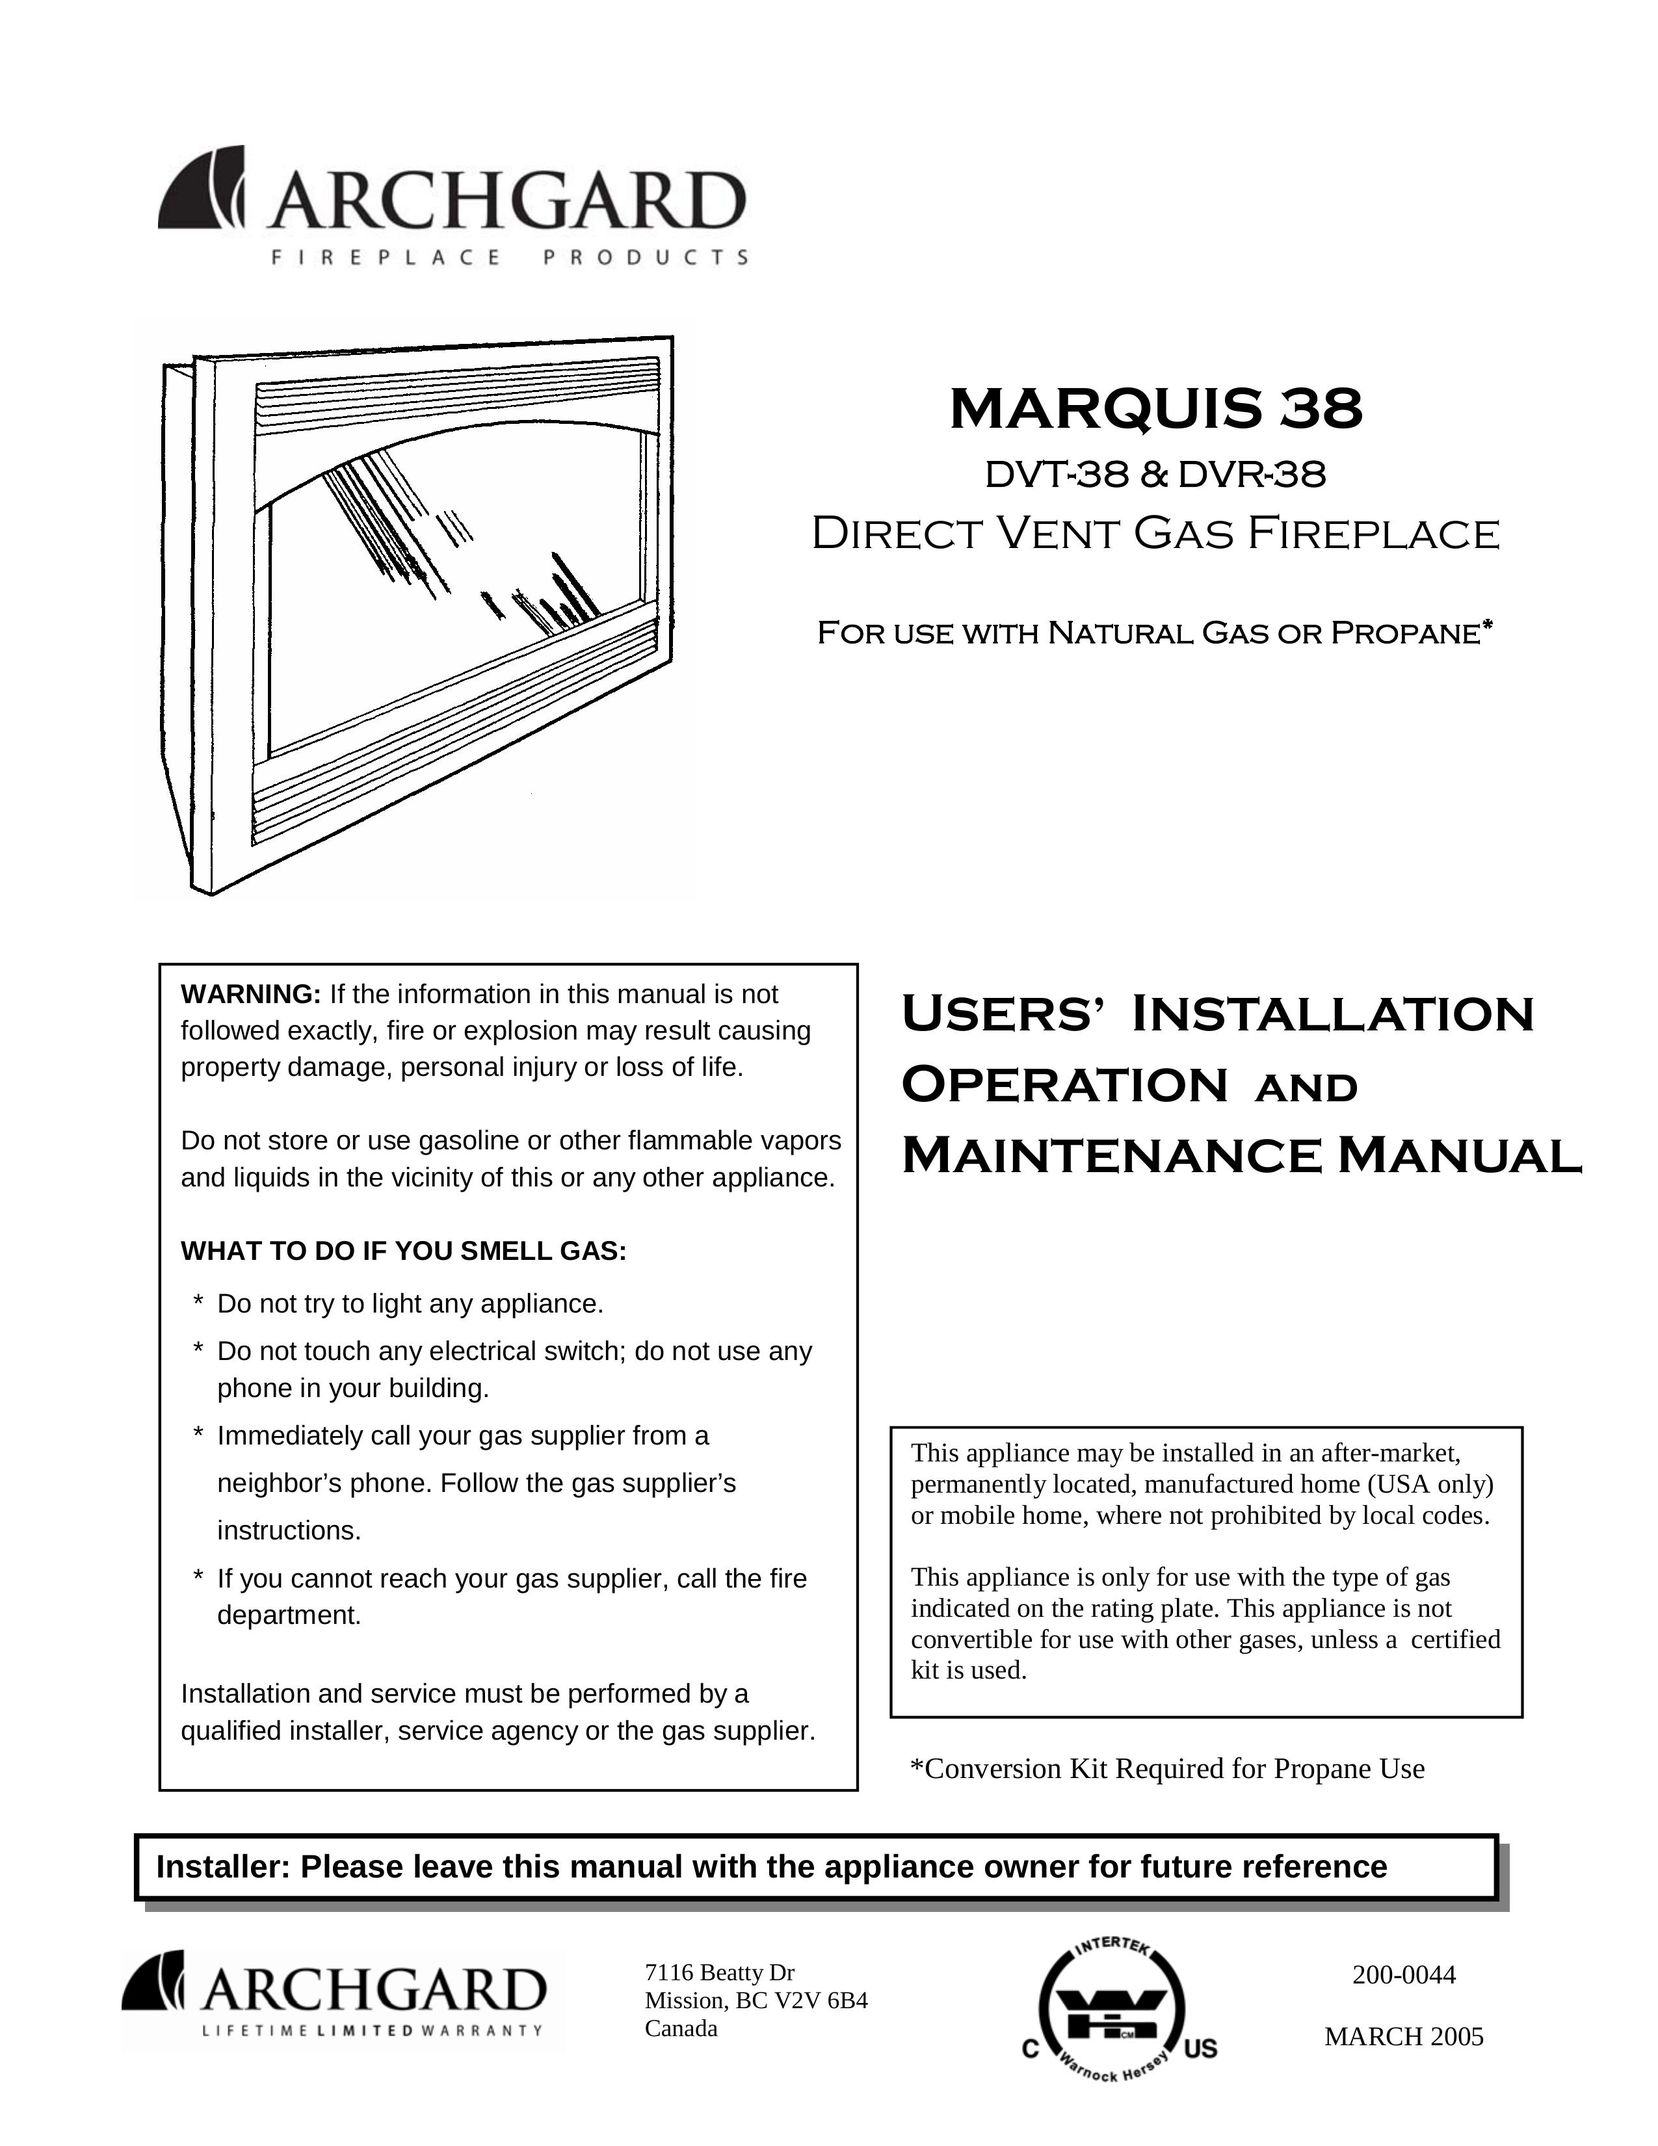 Marquis DVR-38 Indoor Fireplace User Manual